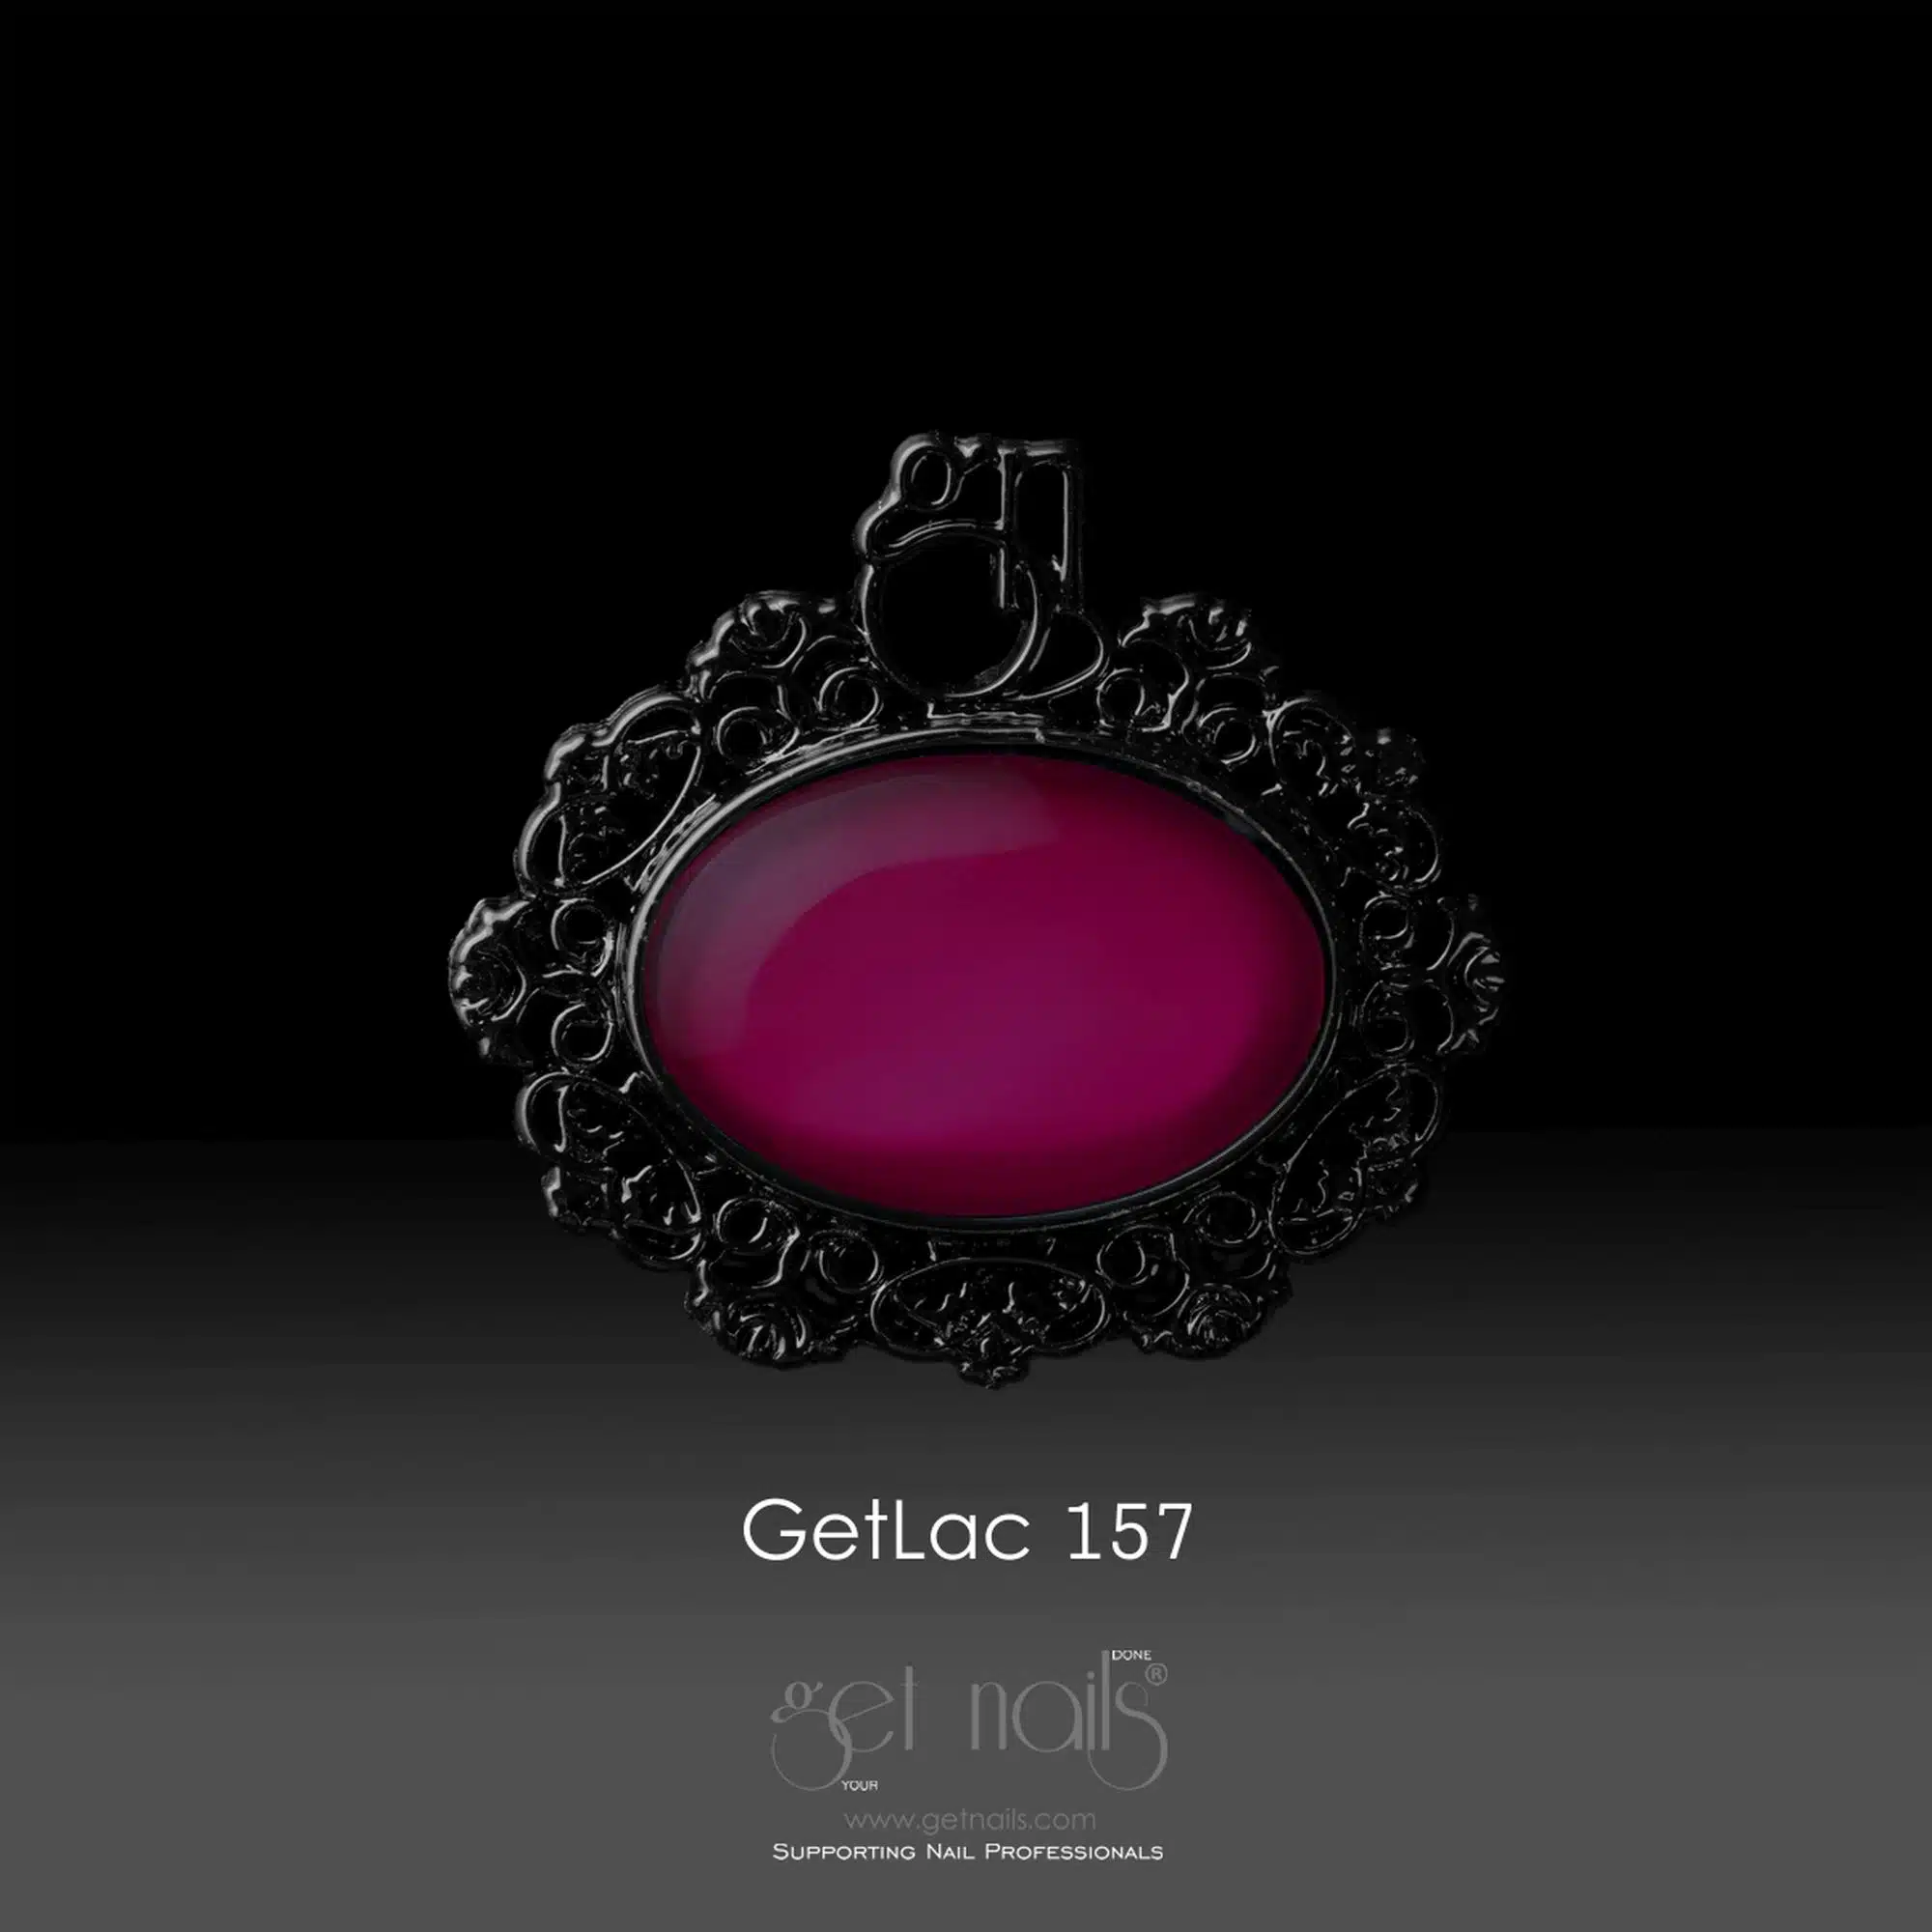 Get Nails Austria - GetLac 157 15г